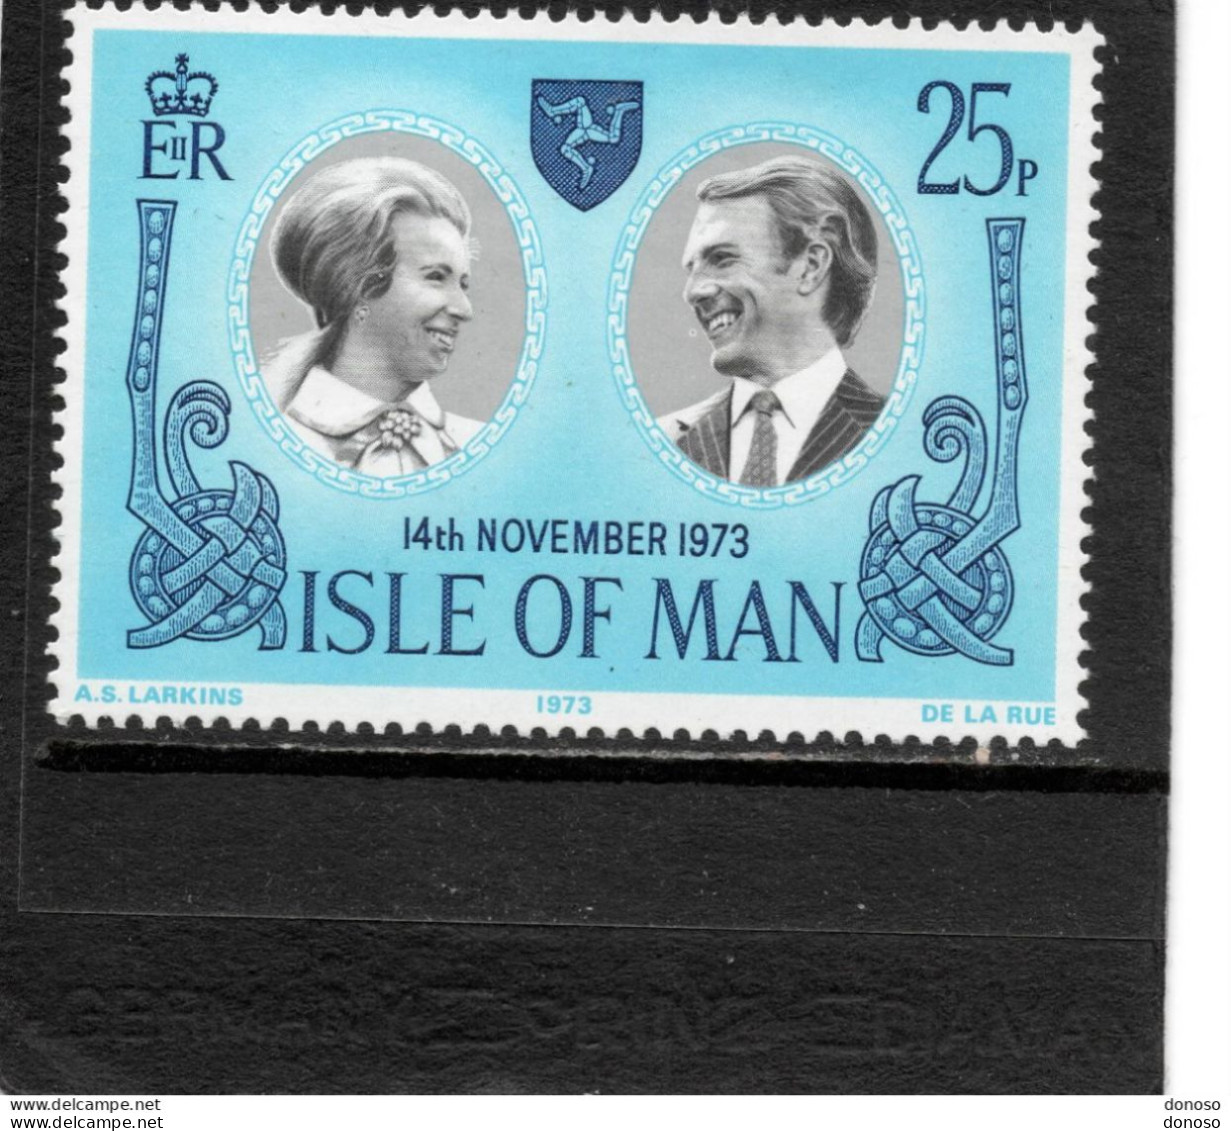 MAN 1973 Princesse Anne Et Capitaine Mark Philips Yvert 24, Michel 35 NEUF** MNH - Isle Of Man